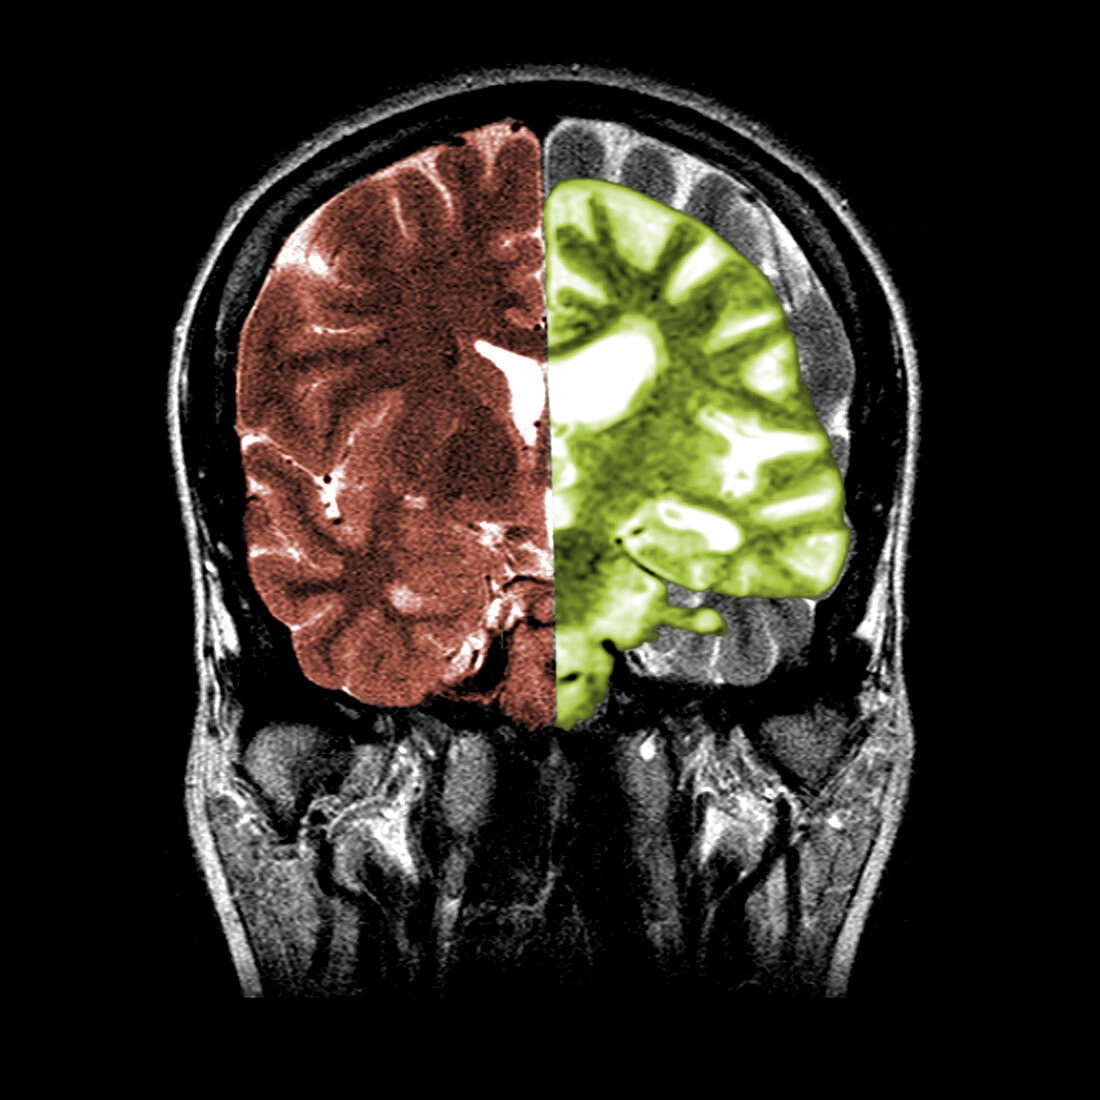 Normal and Alzheimer's Brain MRIs